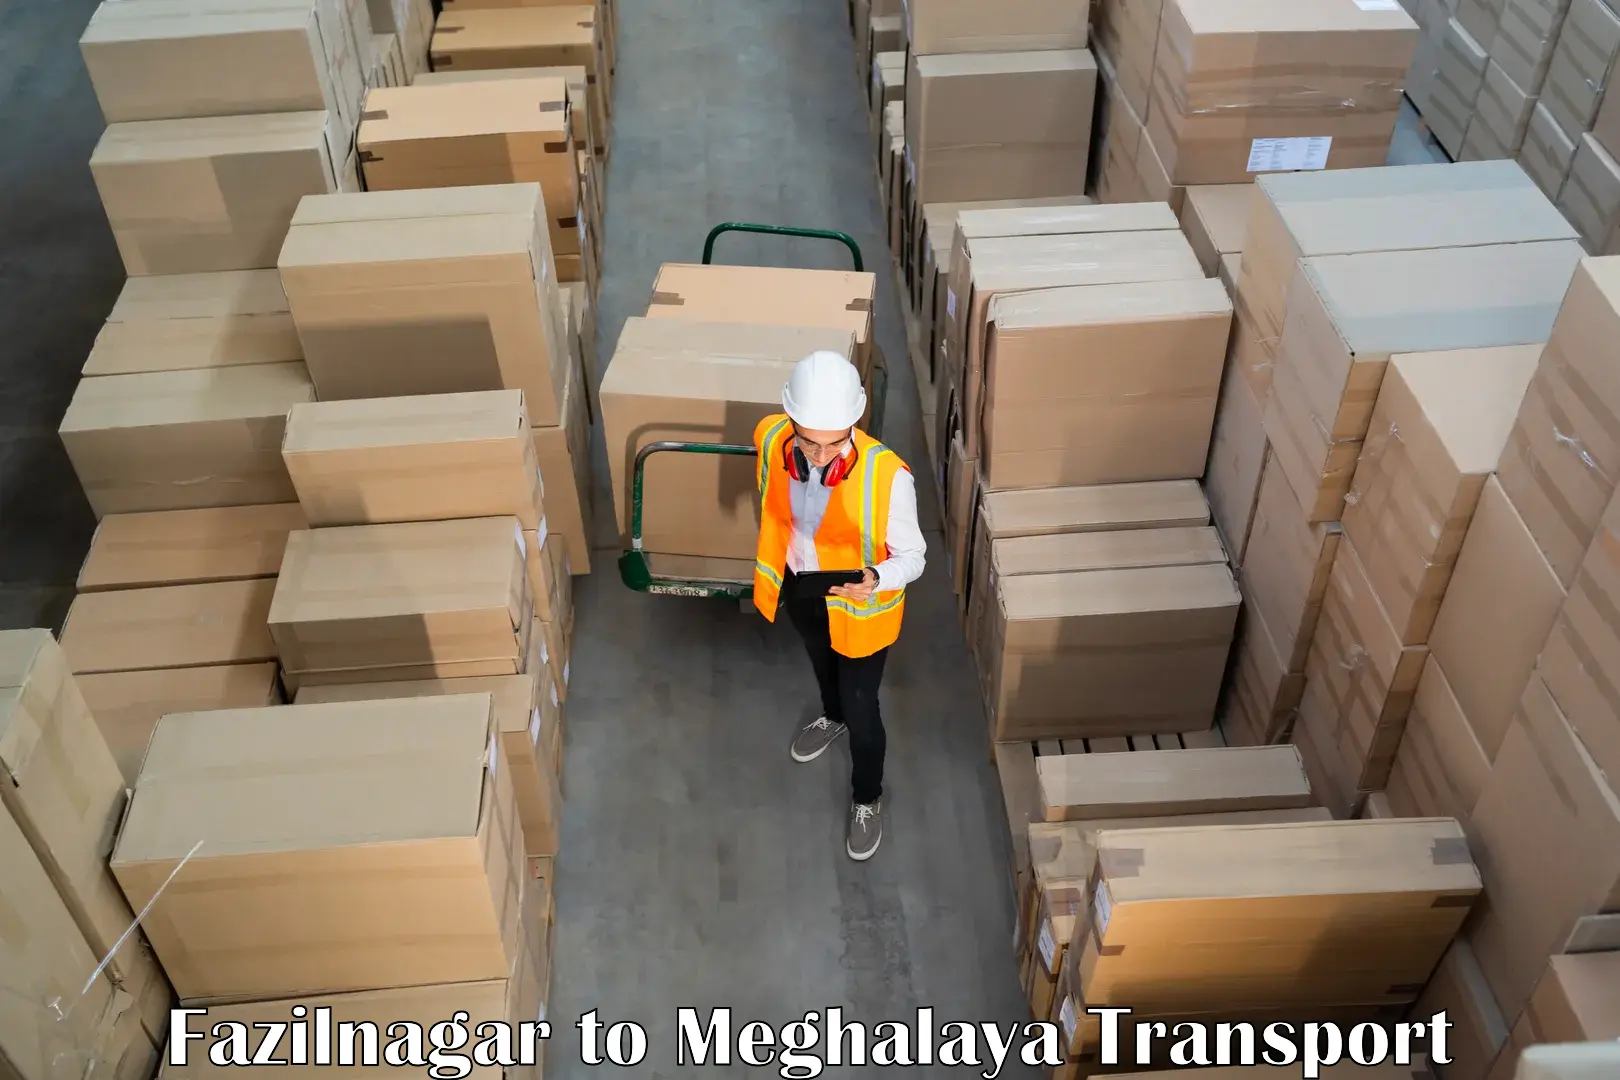 Goods delivery service Fazilnagar to Meghalaya